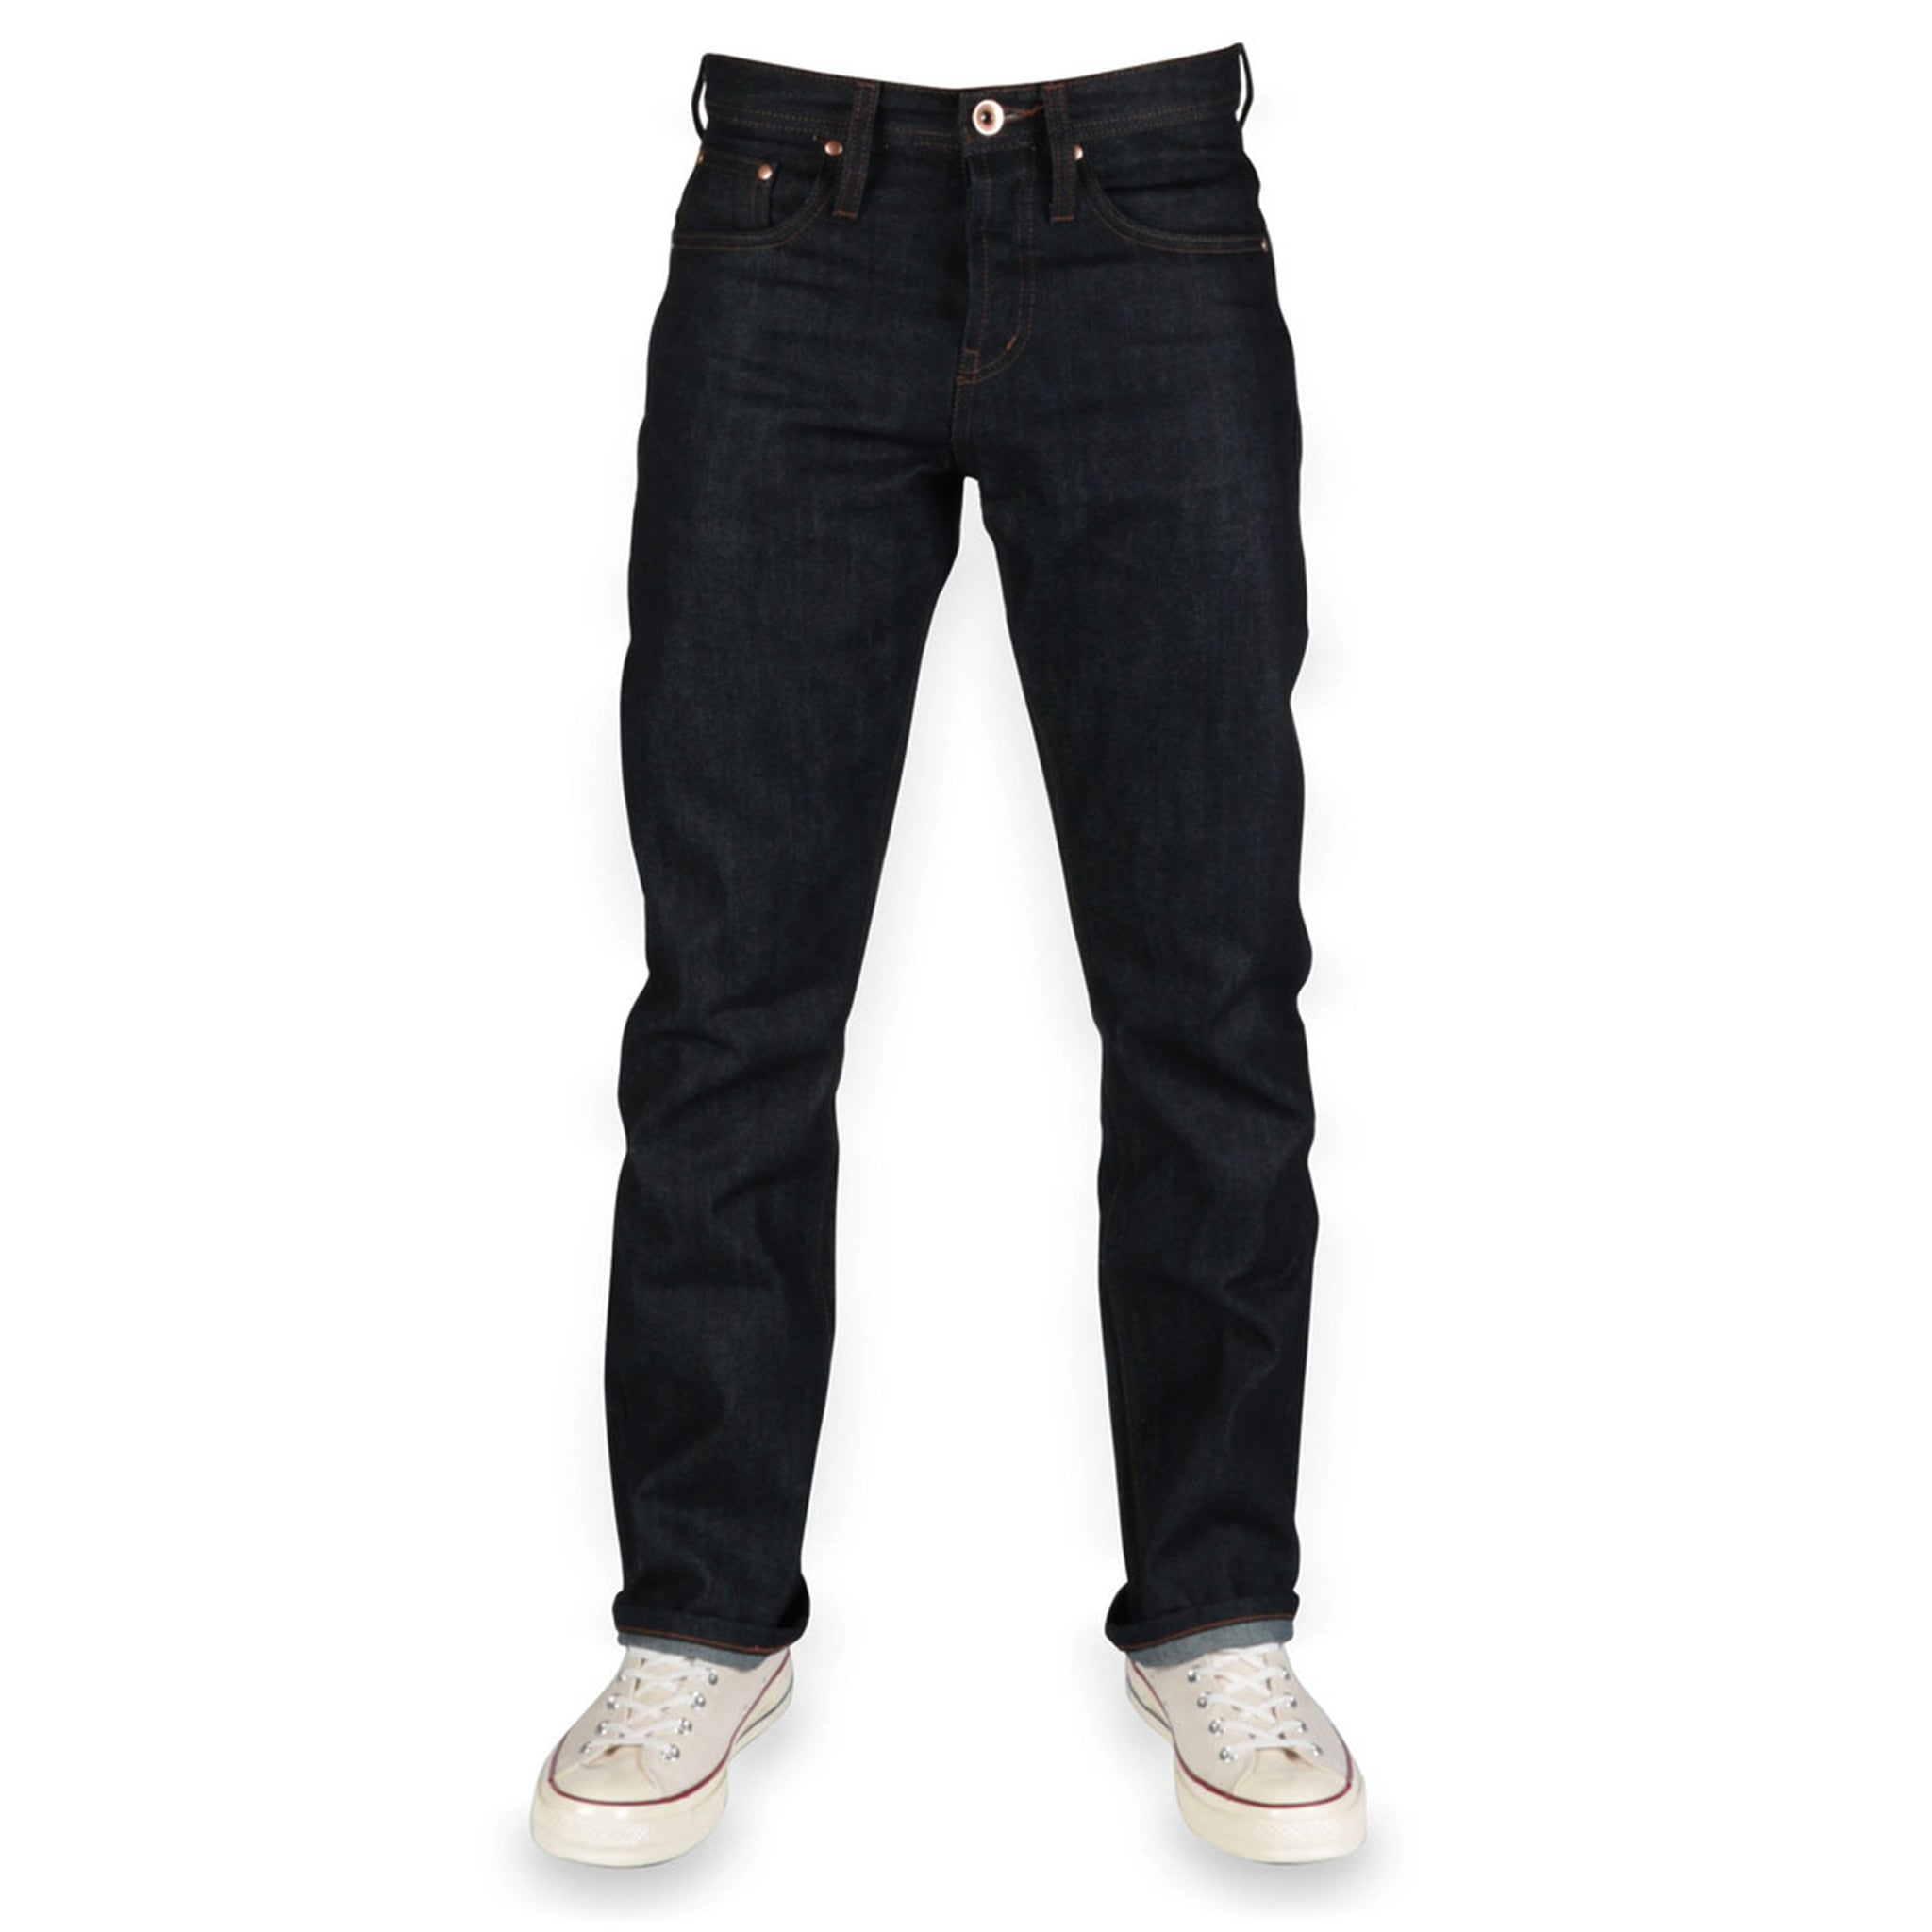 The Unbranded Brand Raw Denim Jeans - Straight 14.5oz Indigo